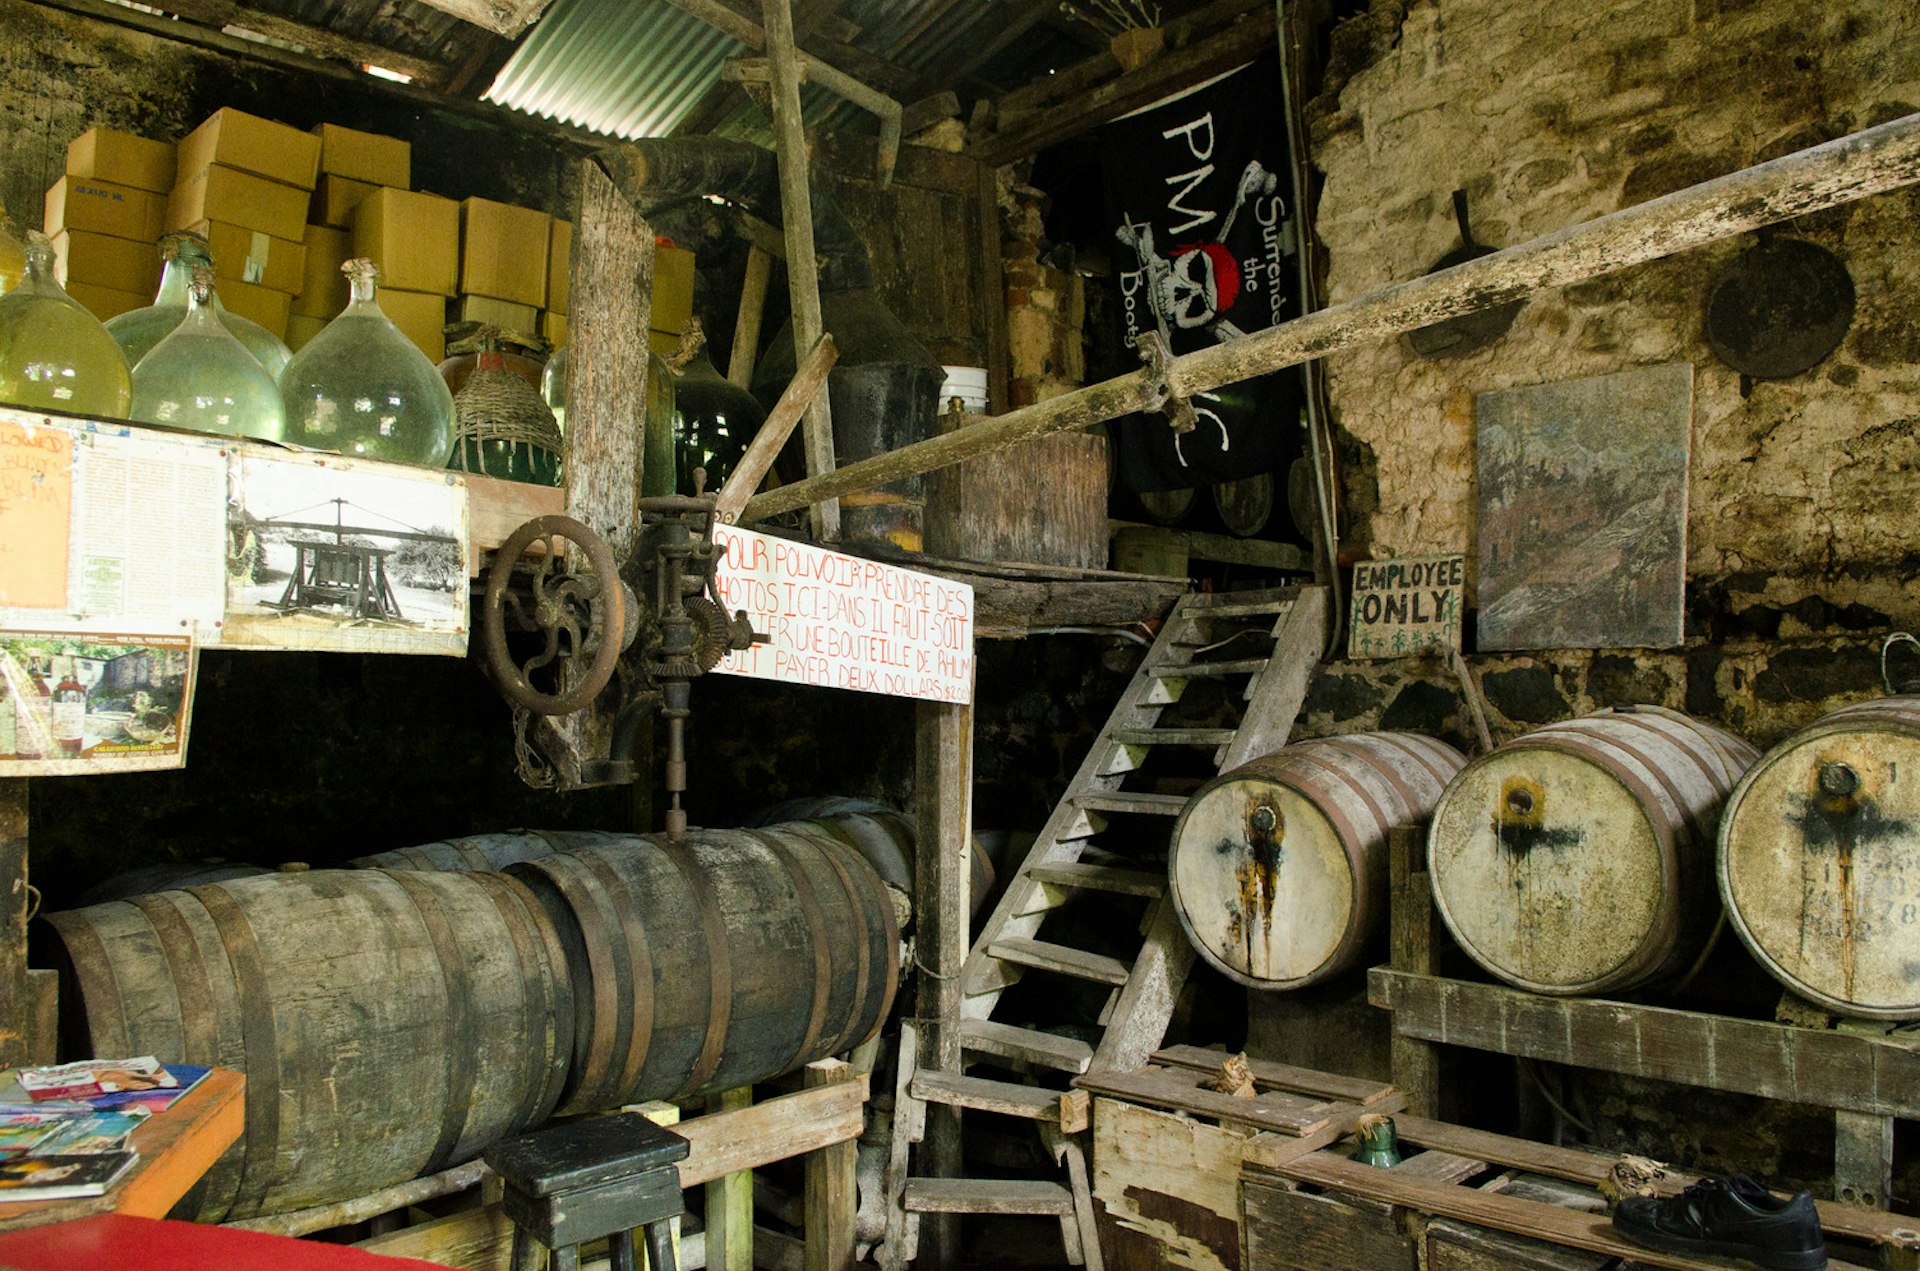 Rum barrels in a workroom at Callwood Distillery in BVI